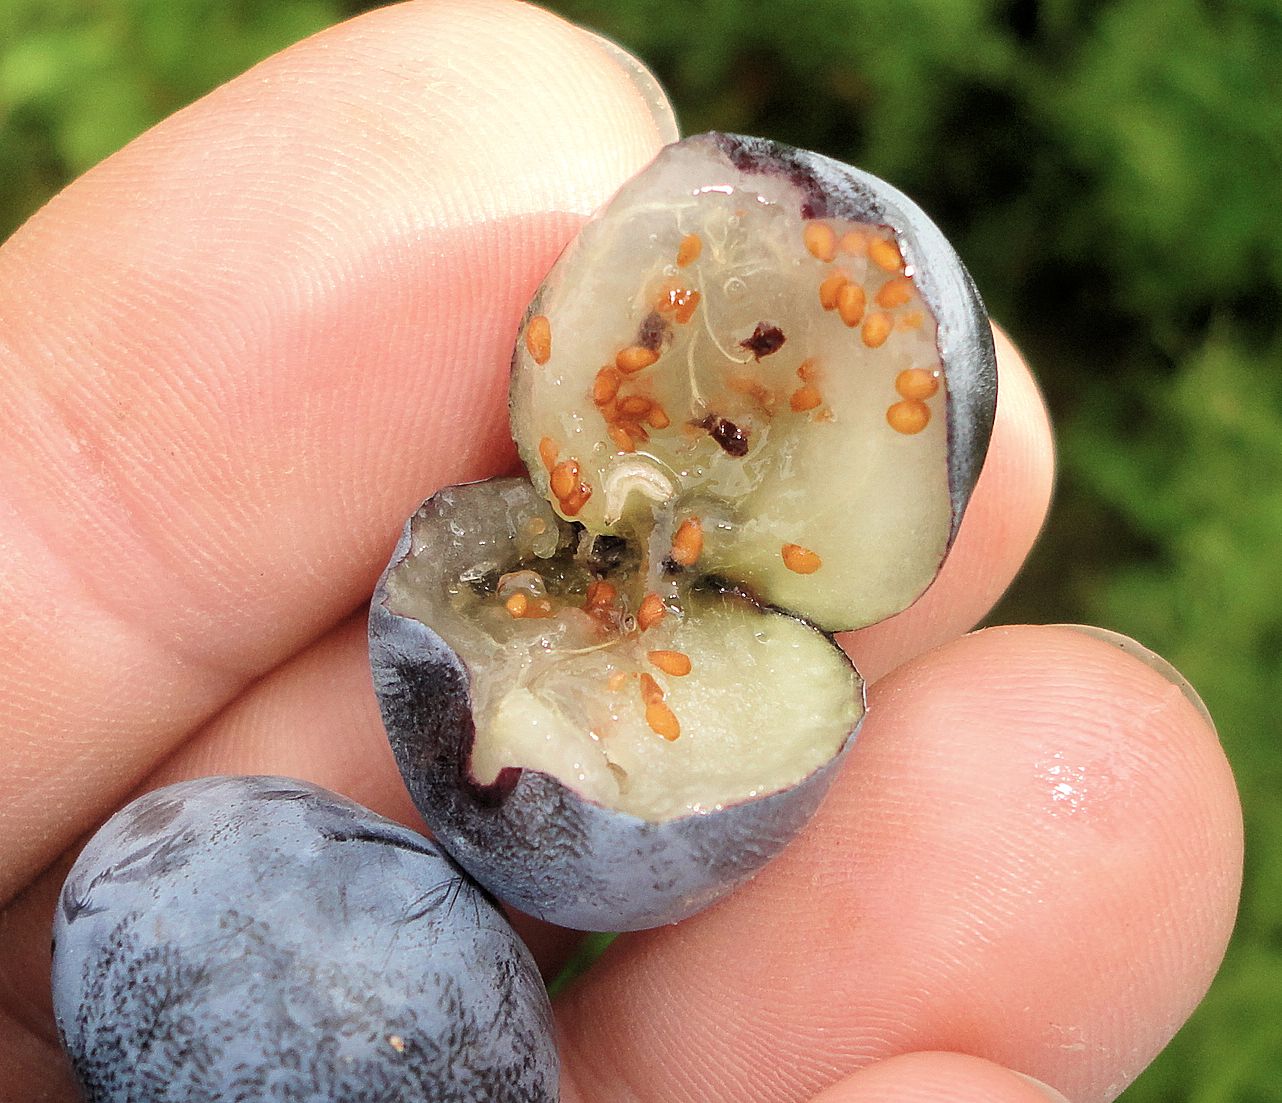 The blueberry maggot